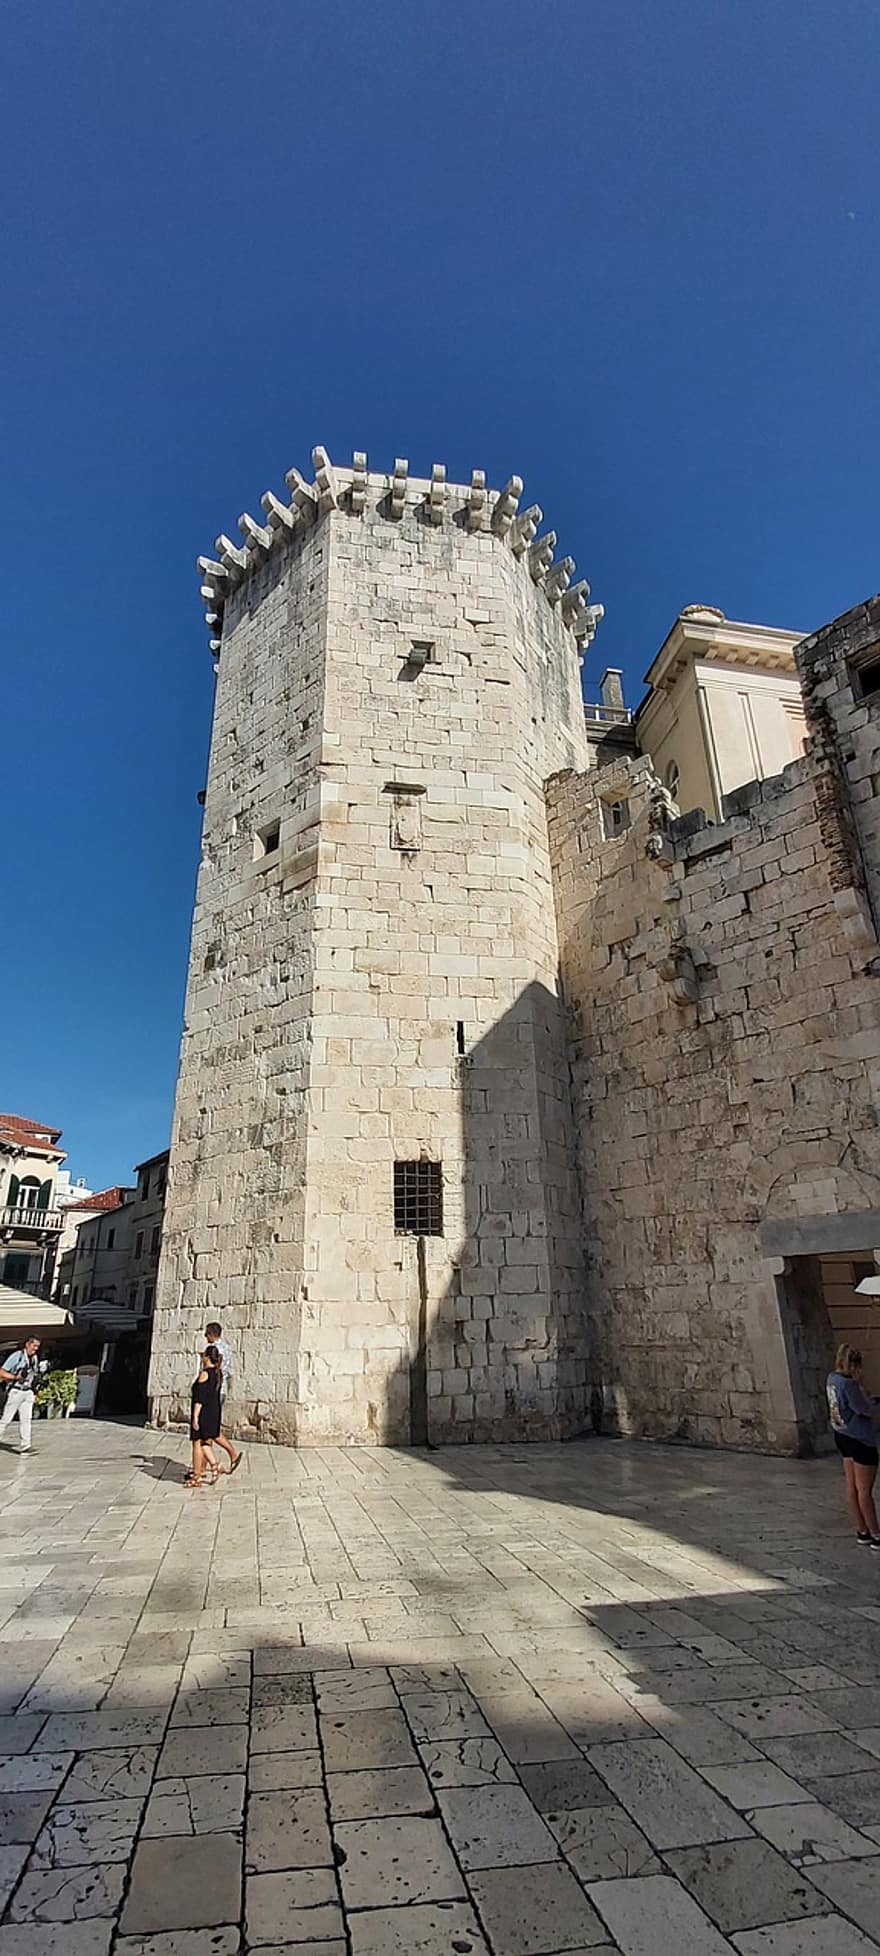 Venetian Tower, Castle, Split, Croatia, Tower, Medieval, Roman, Ancient, Architecture, Historical, Landmark